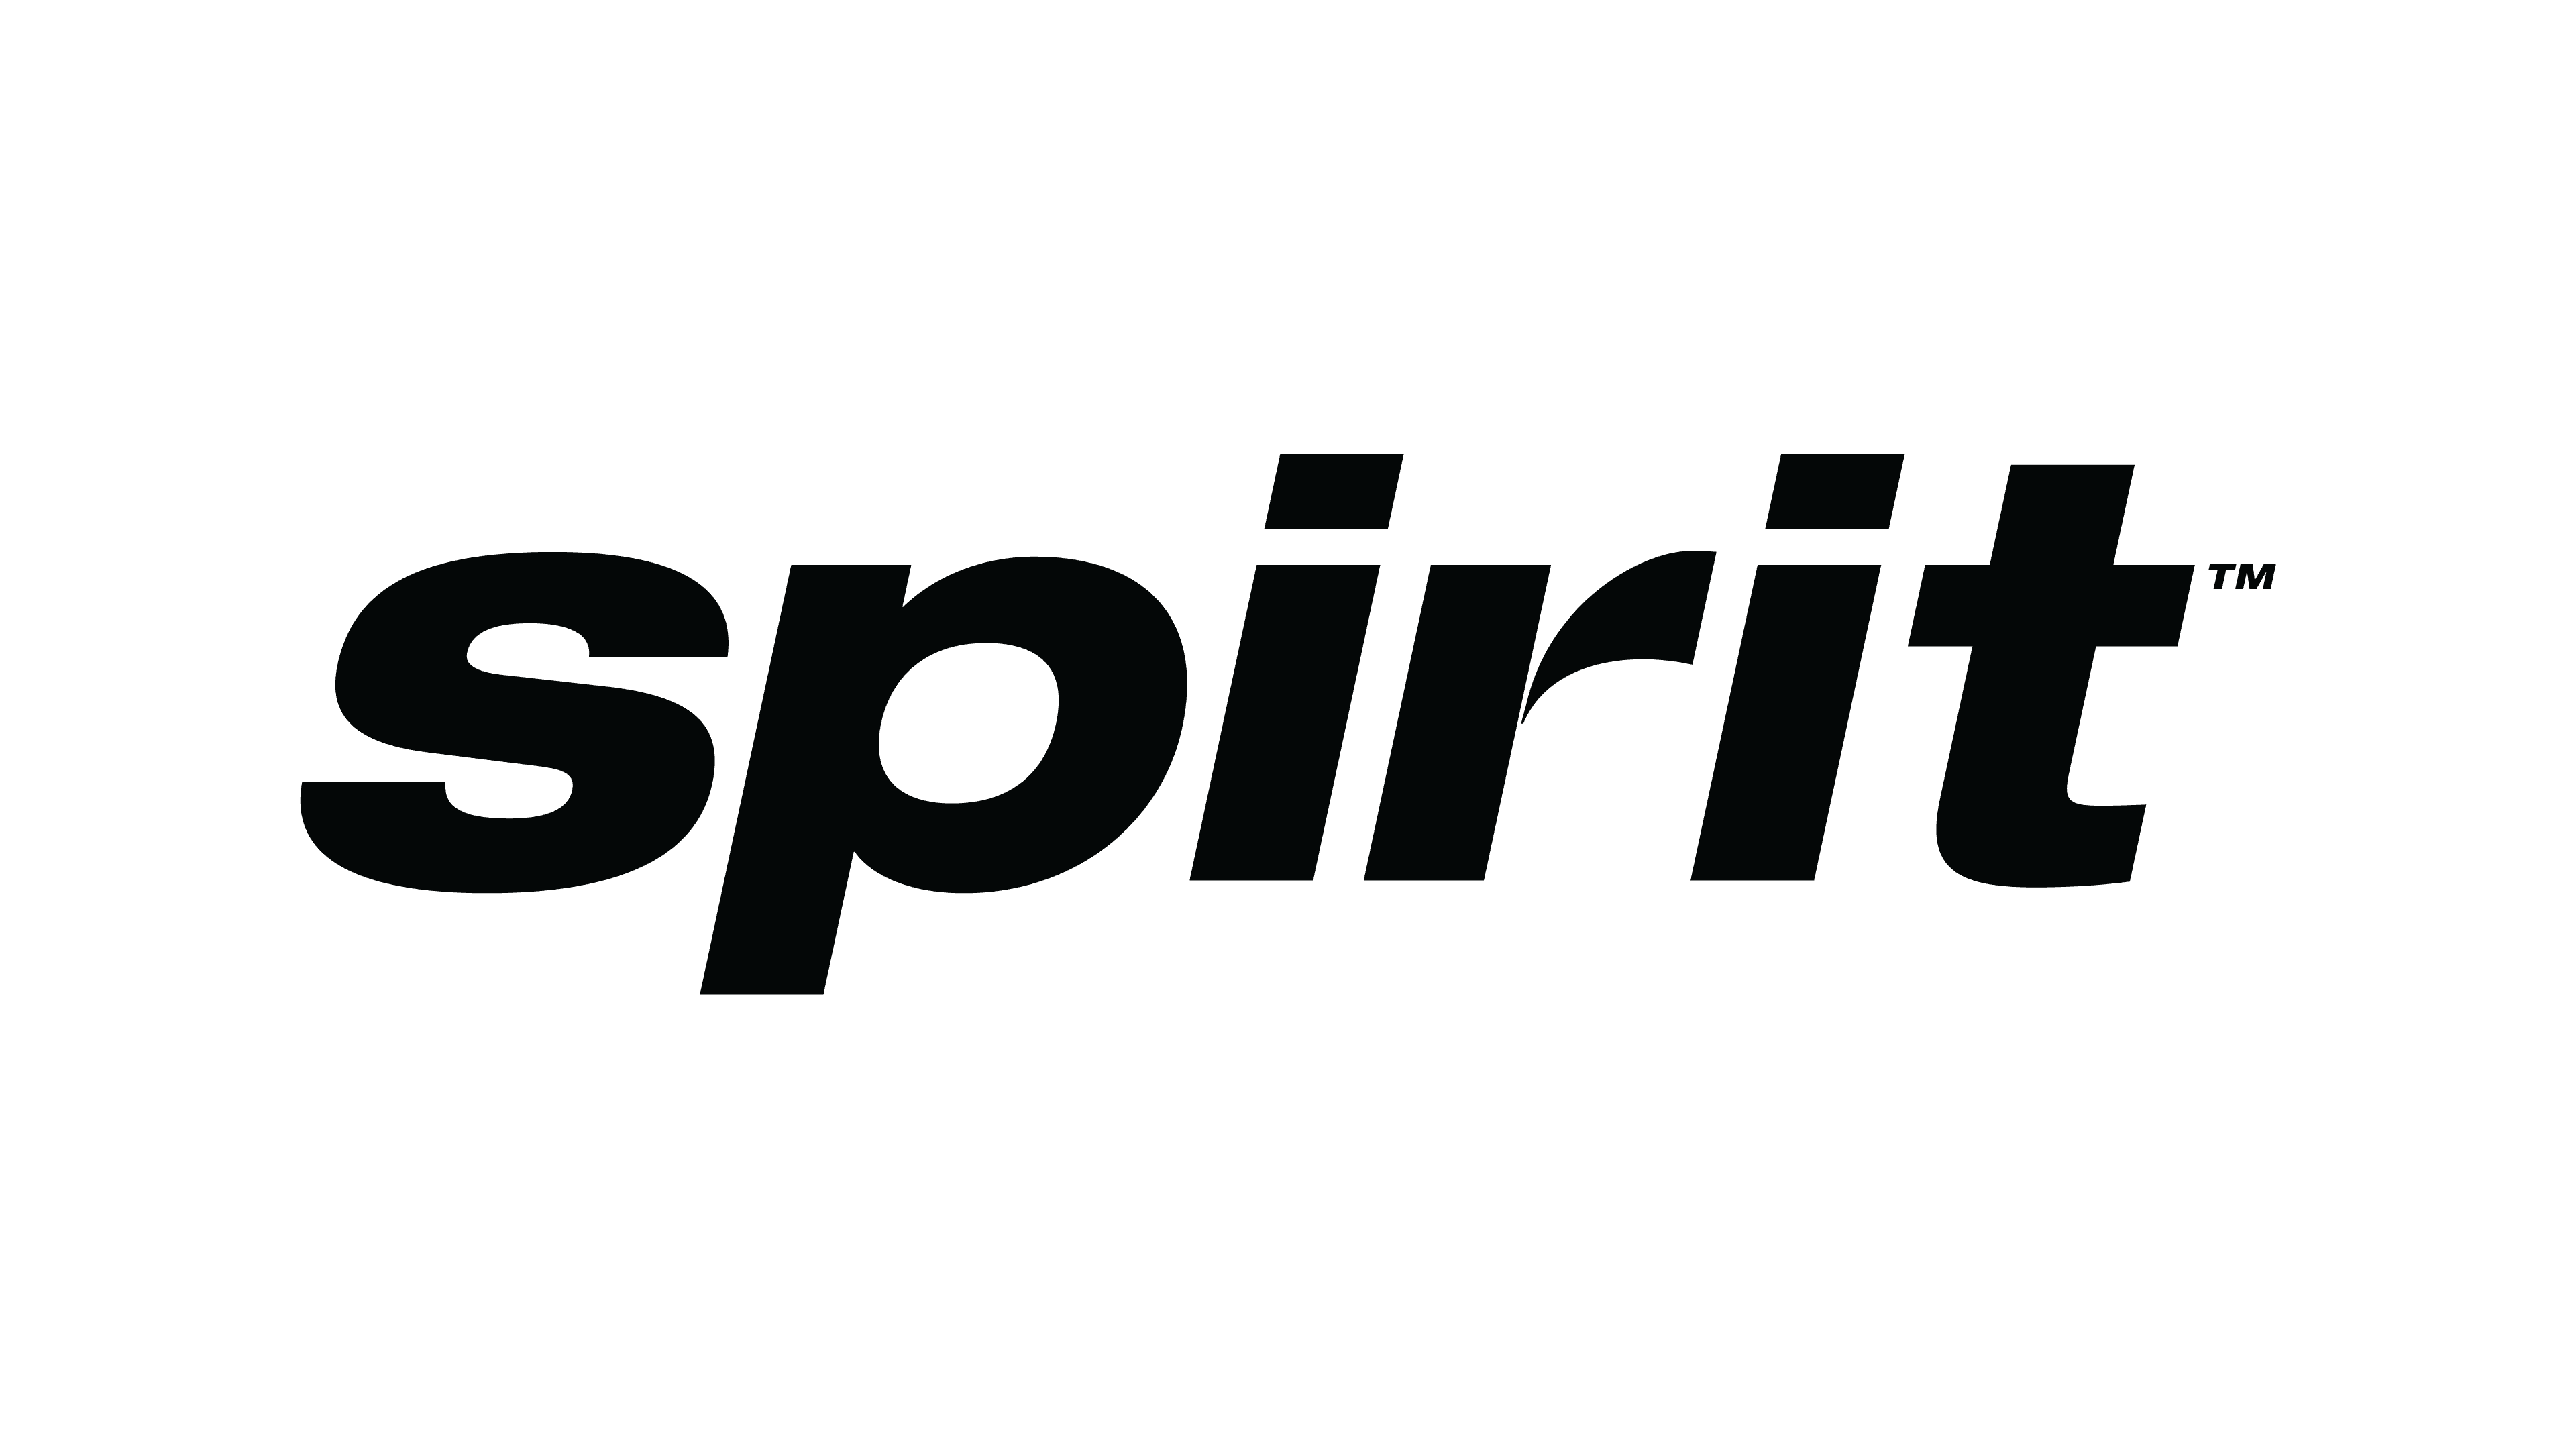 Spirit-Airlines-logo